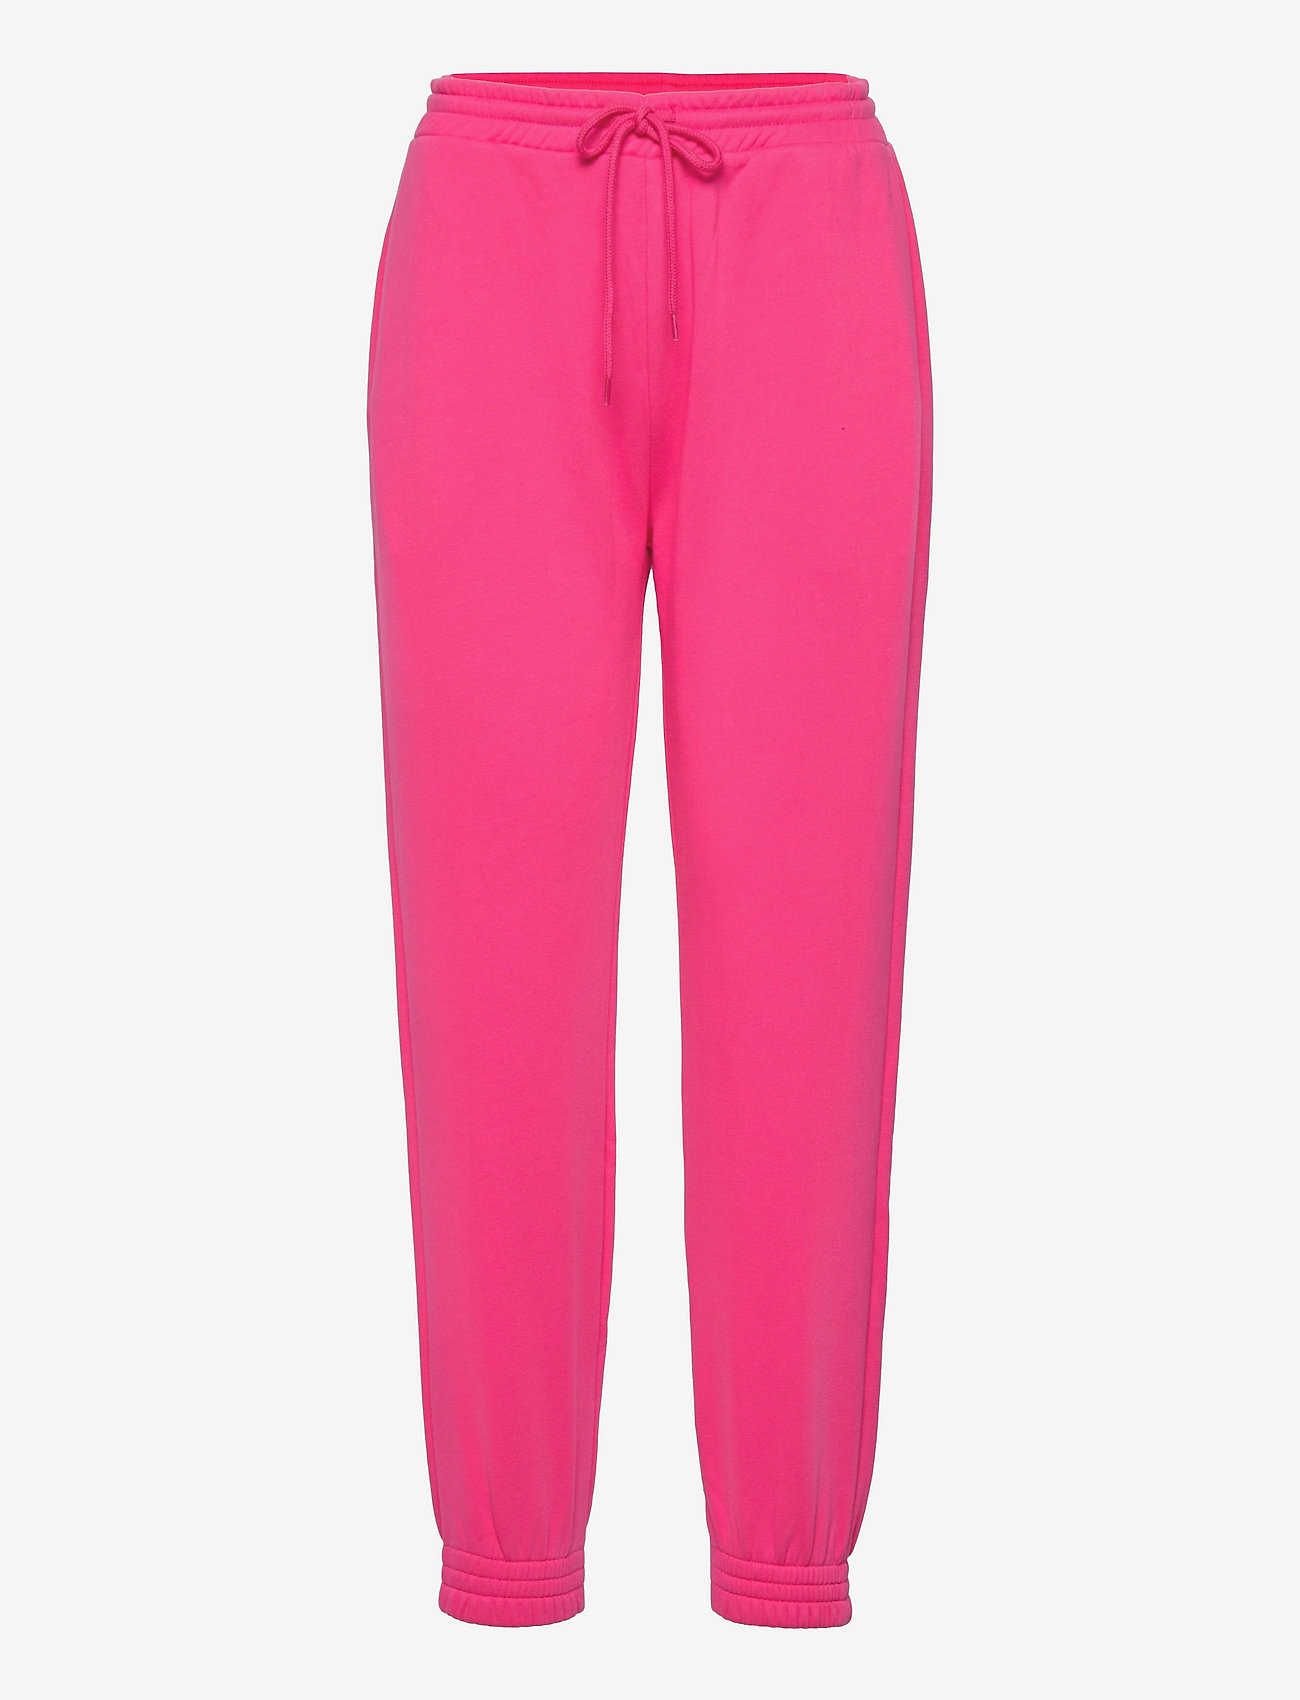 Modström - Holly pants - super pink - 0